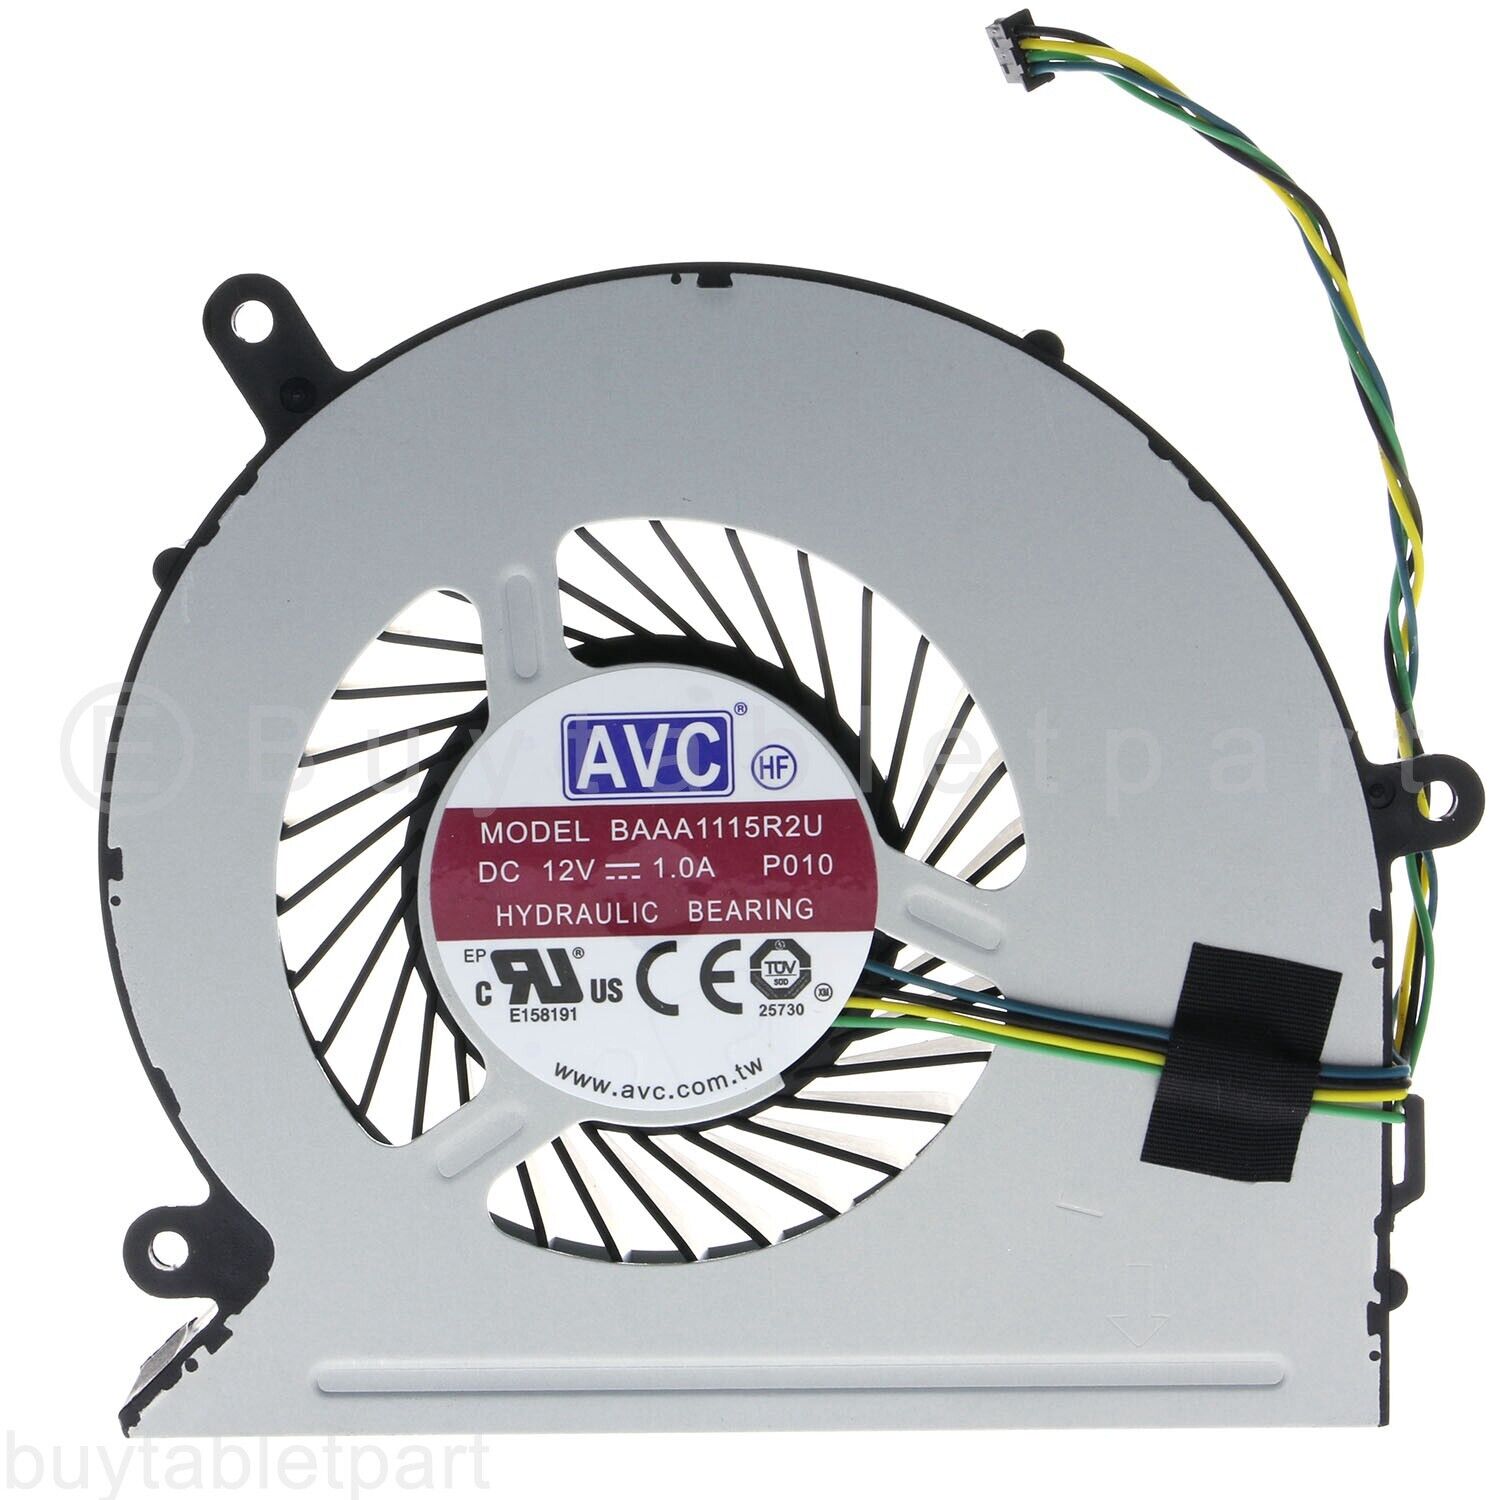 NEW Cpu Cooling Fan For LENOVO IDEACENTRE AIO M800Z M900Z M910Z 700-22ISH